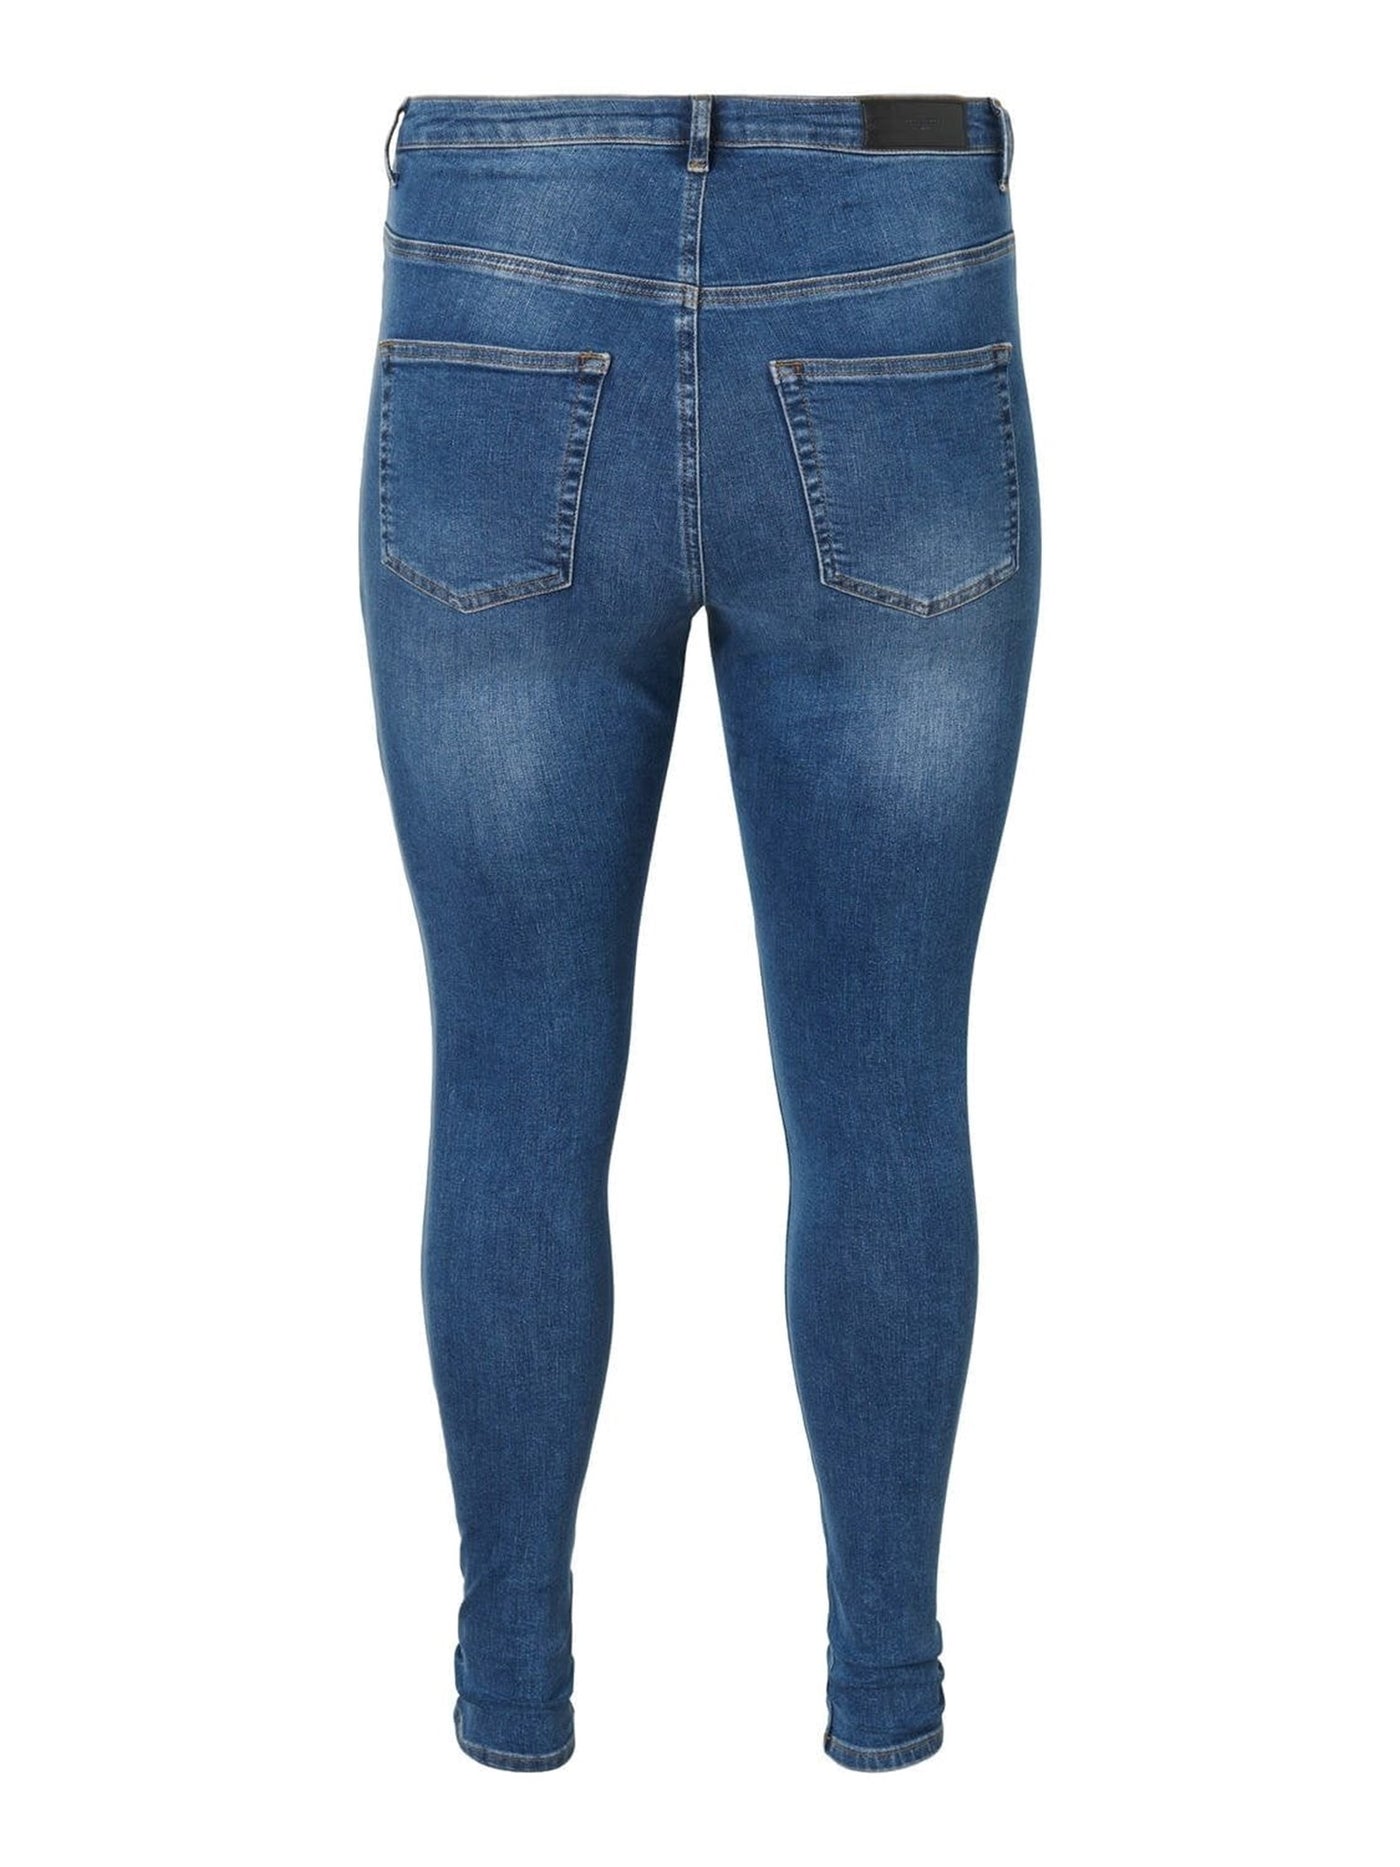 Lora Jeans high waisted (Curve) - Medium blå denim - Vero Moda Curve 2